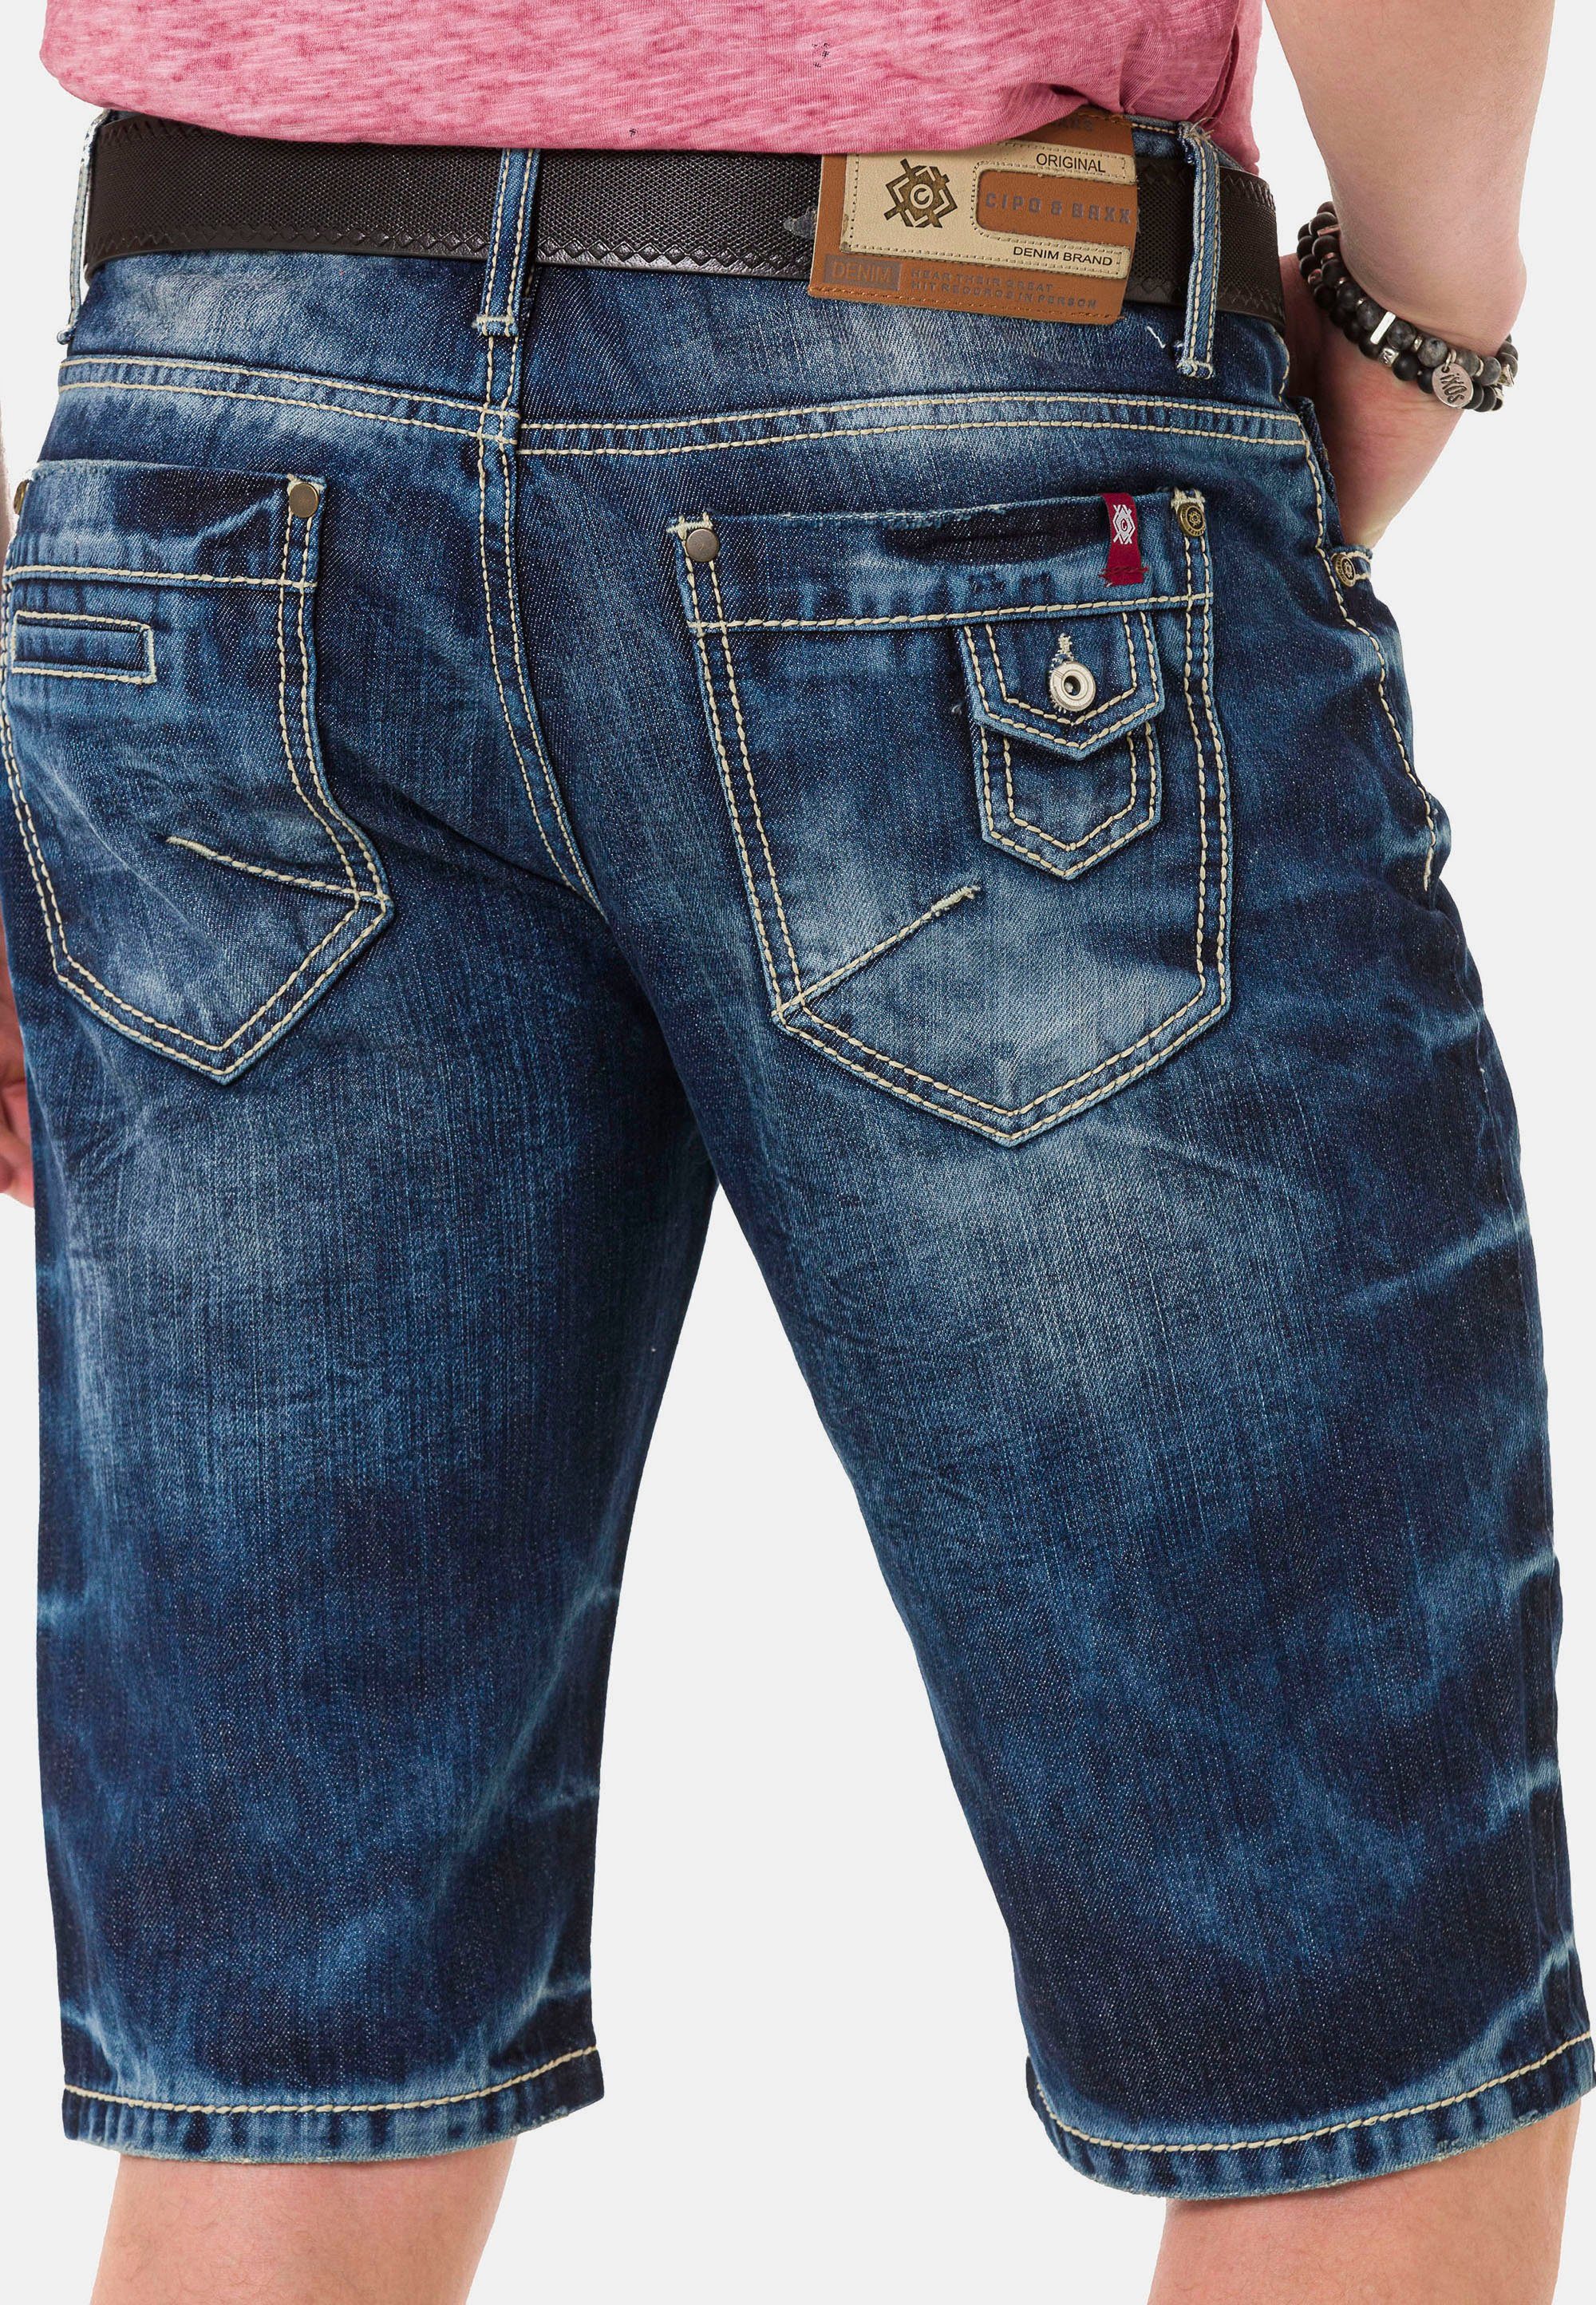 & trendiger Baxx Cipo Used-Waschung mit Shorts